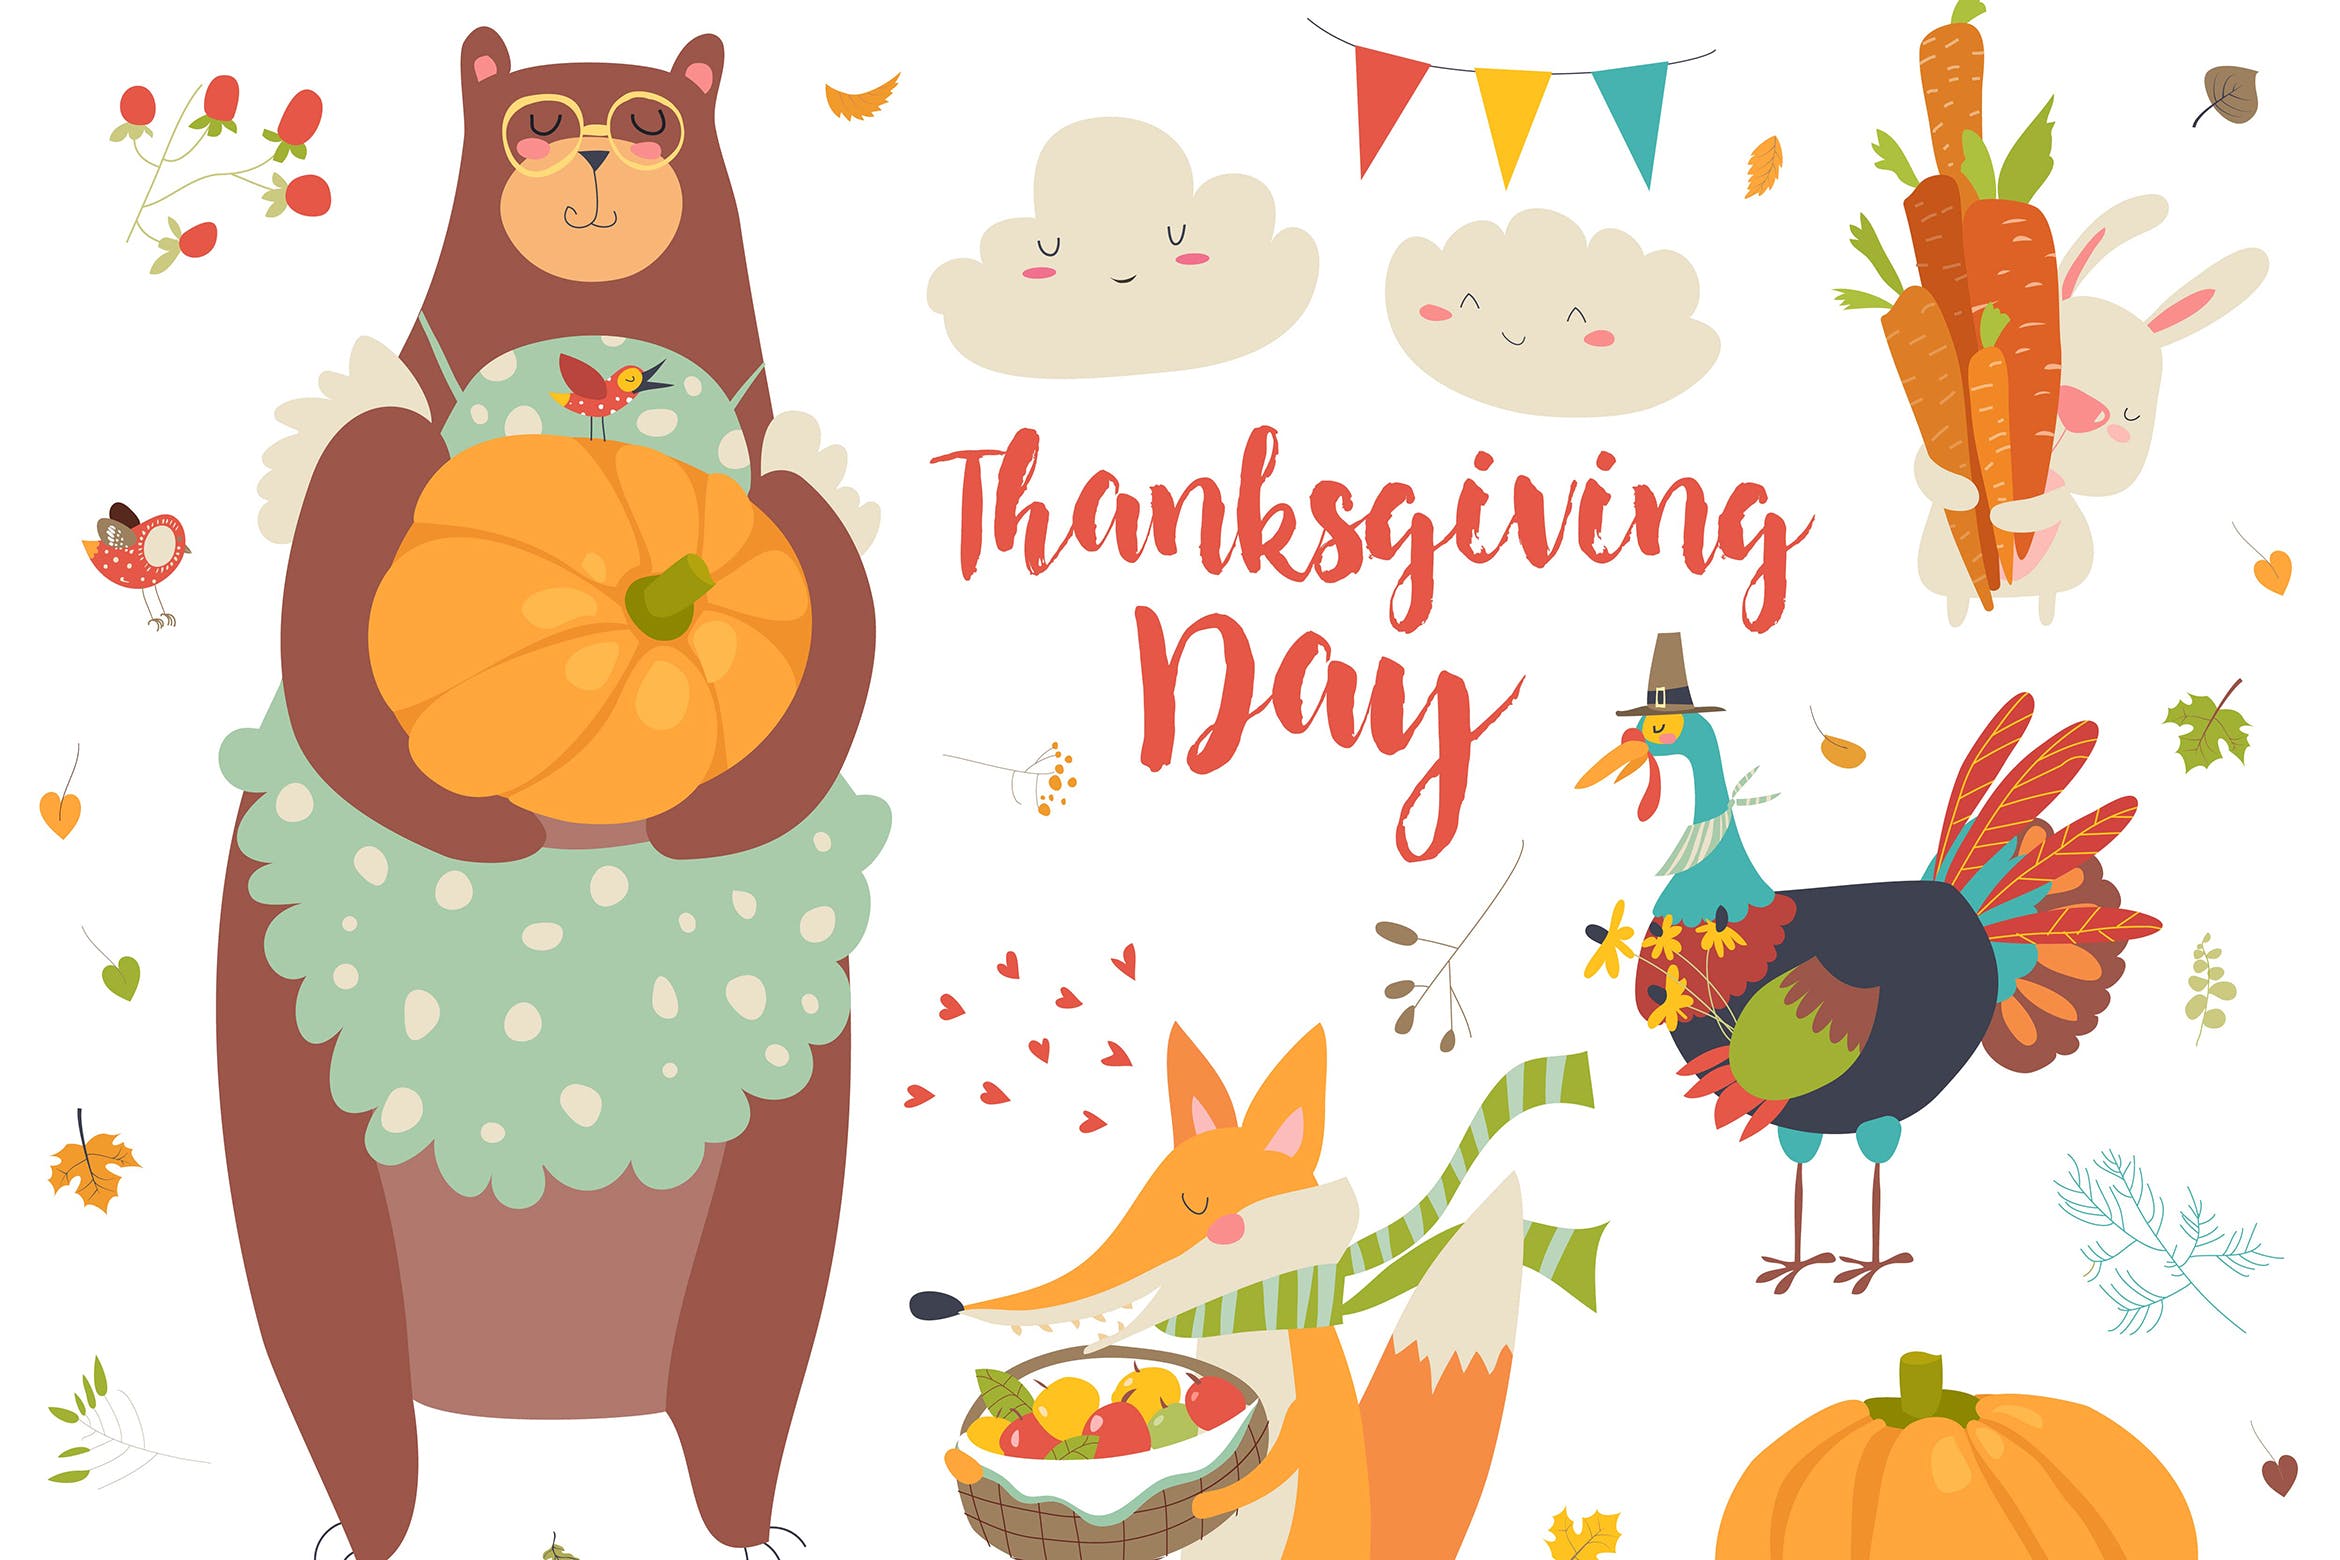 感恩节可爱动物手绘矢量图形素材 Thanksgiving set with cute forest animals, leaves插图